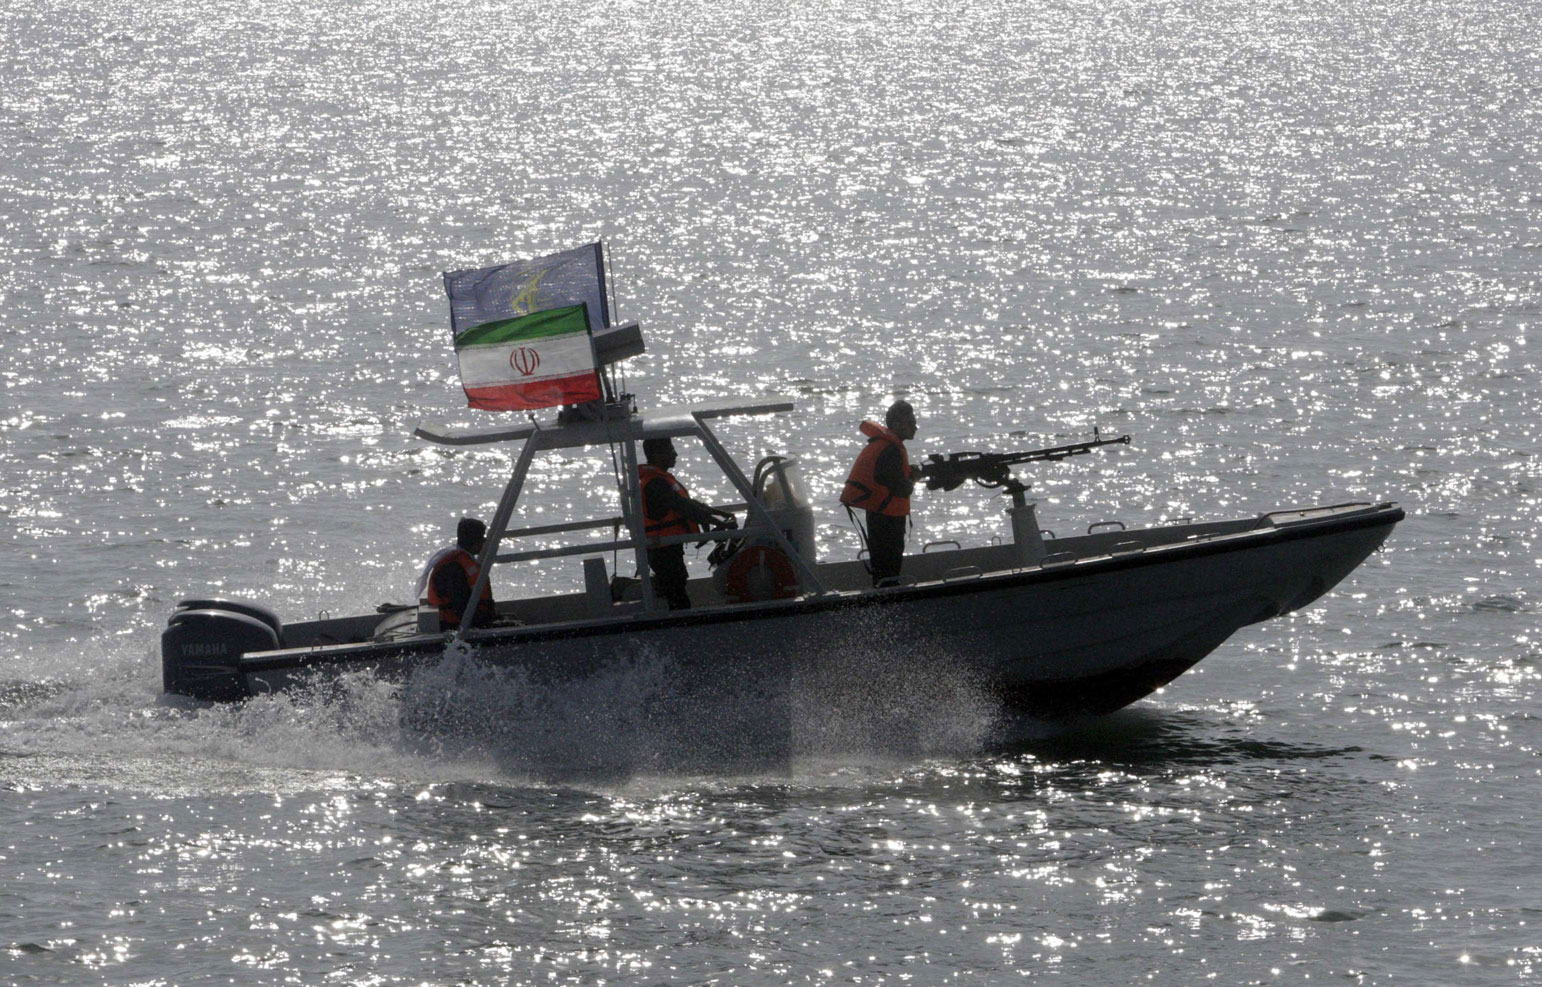 Persian Gulf Tensions